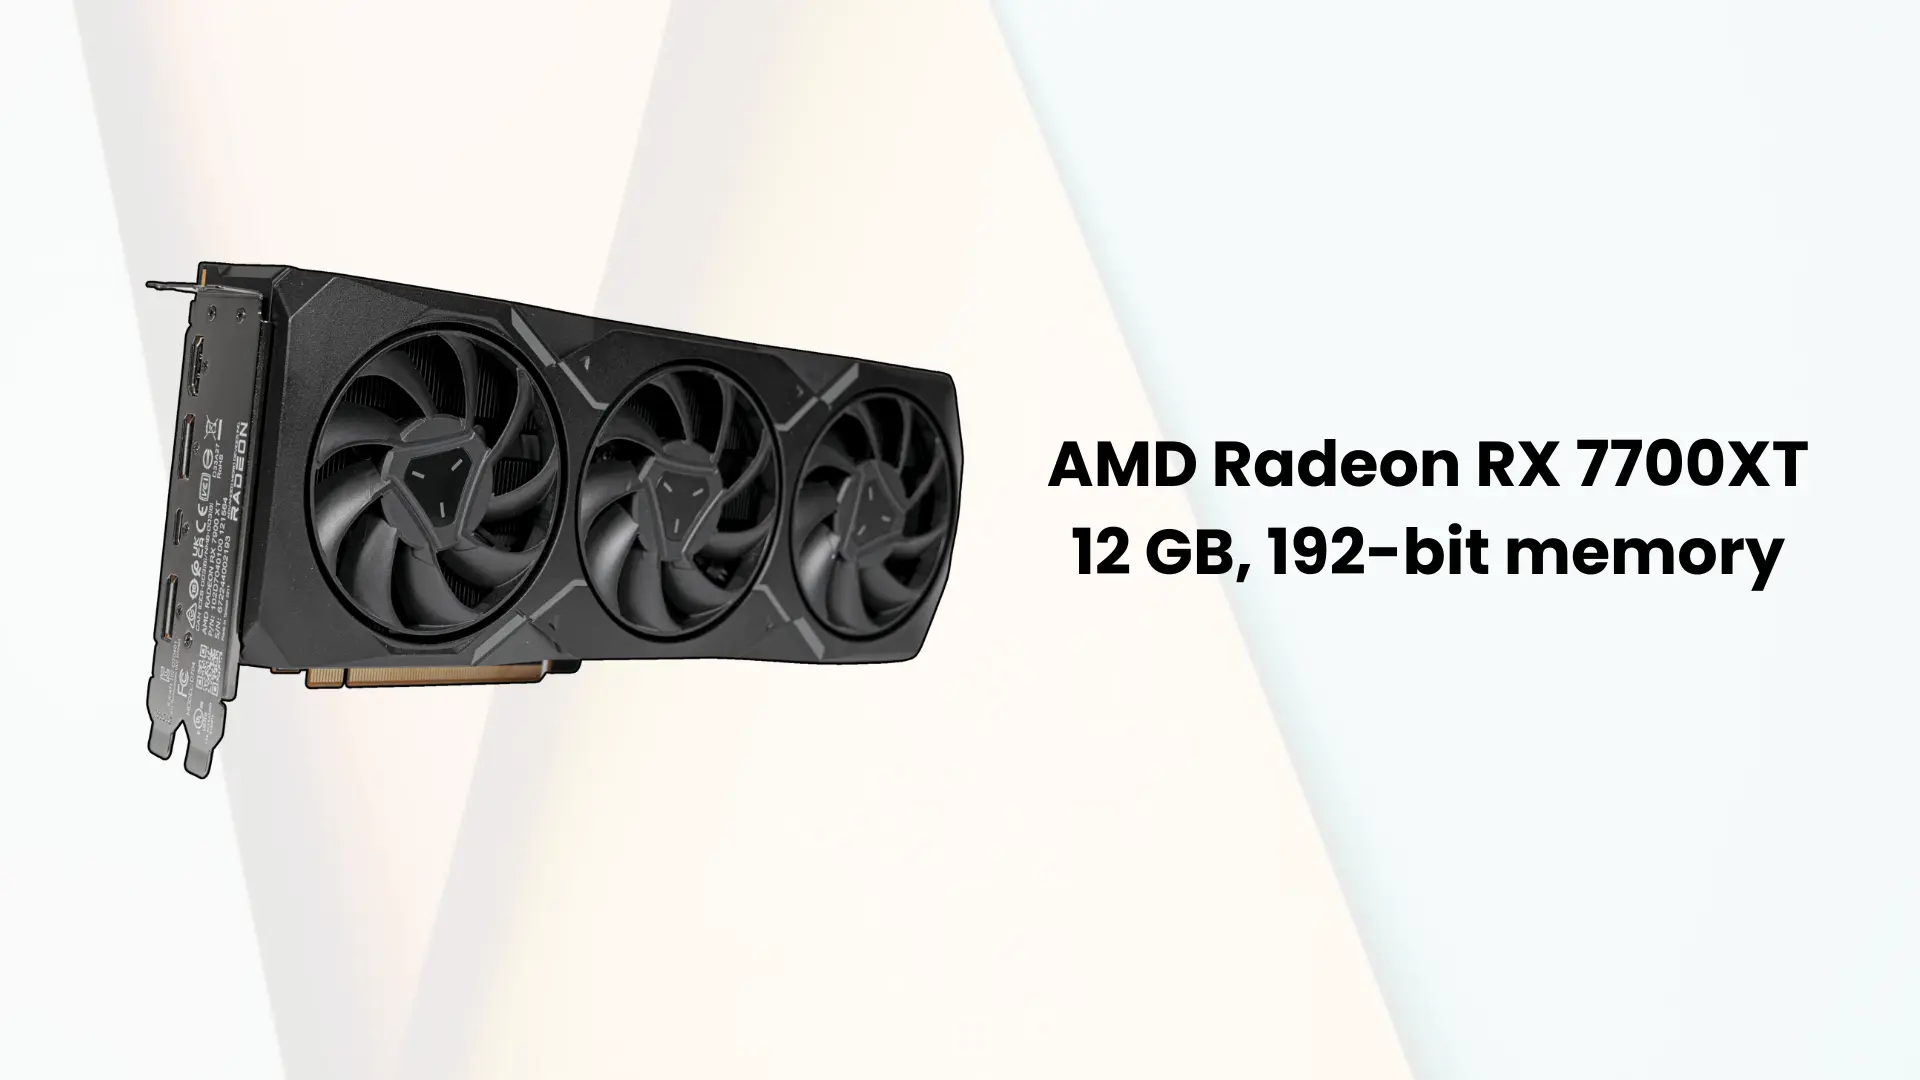 AMD Radeon RX 7700 XT Specifications Leaked: 12 GB, 192-bit Memory Bus